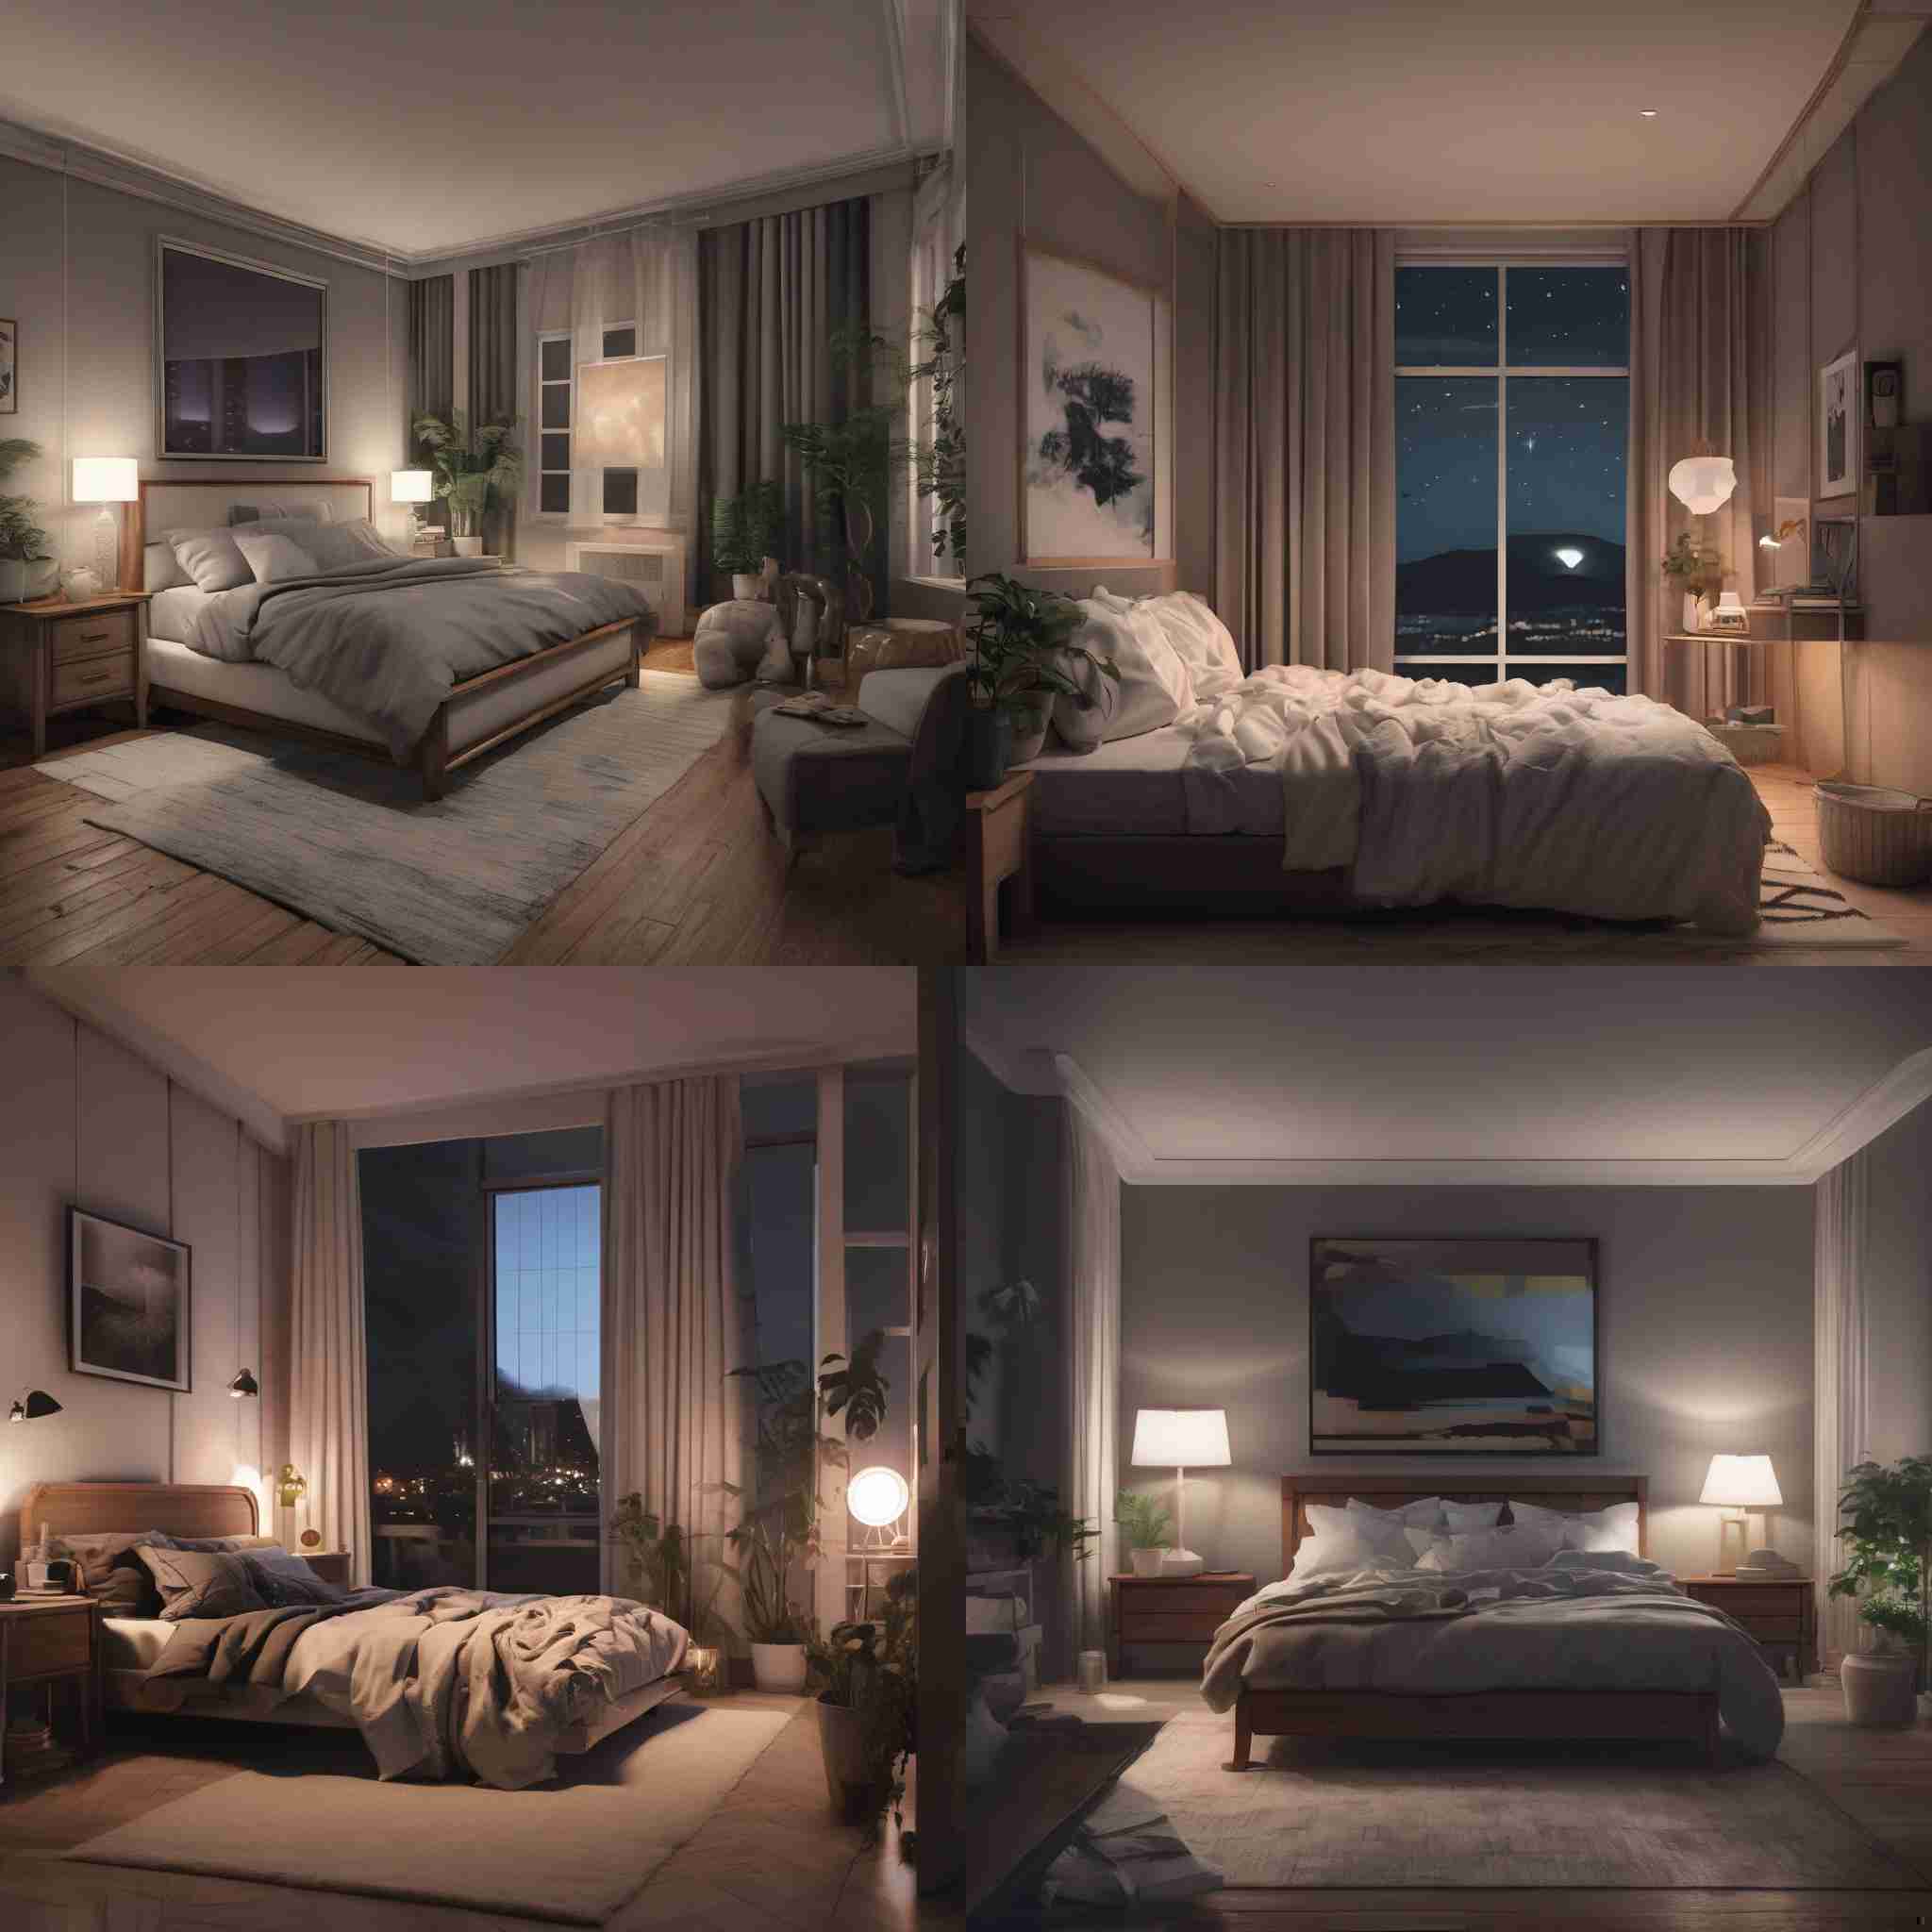 A bedroom at night